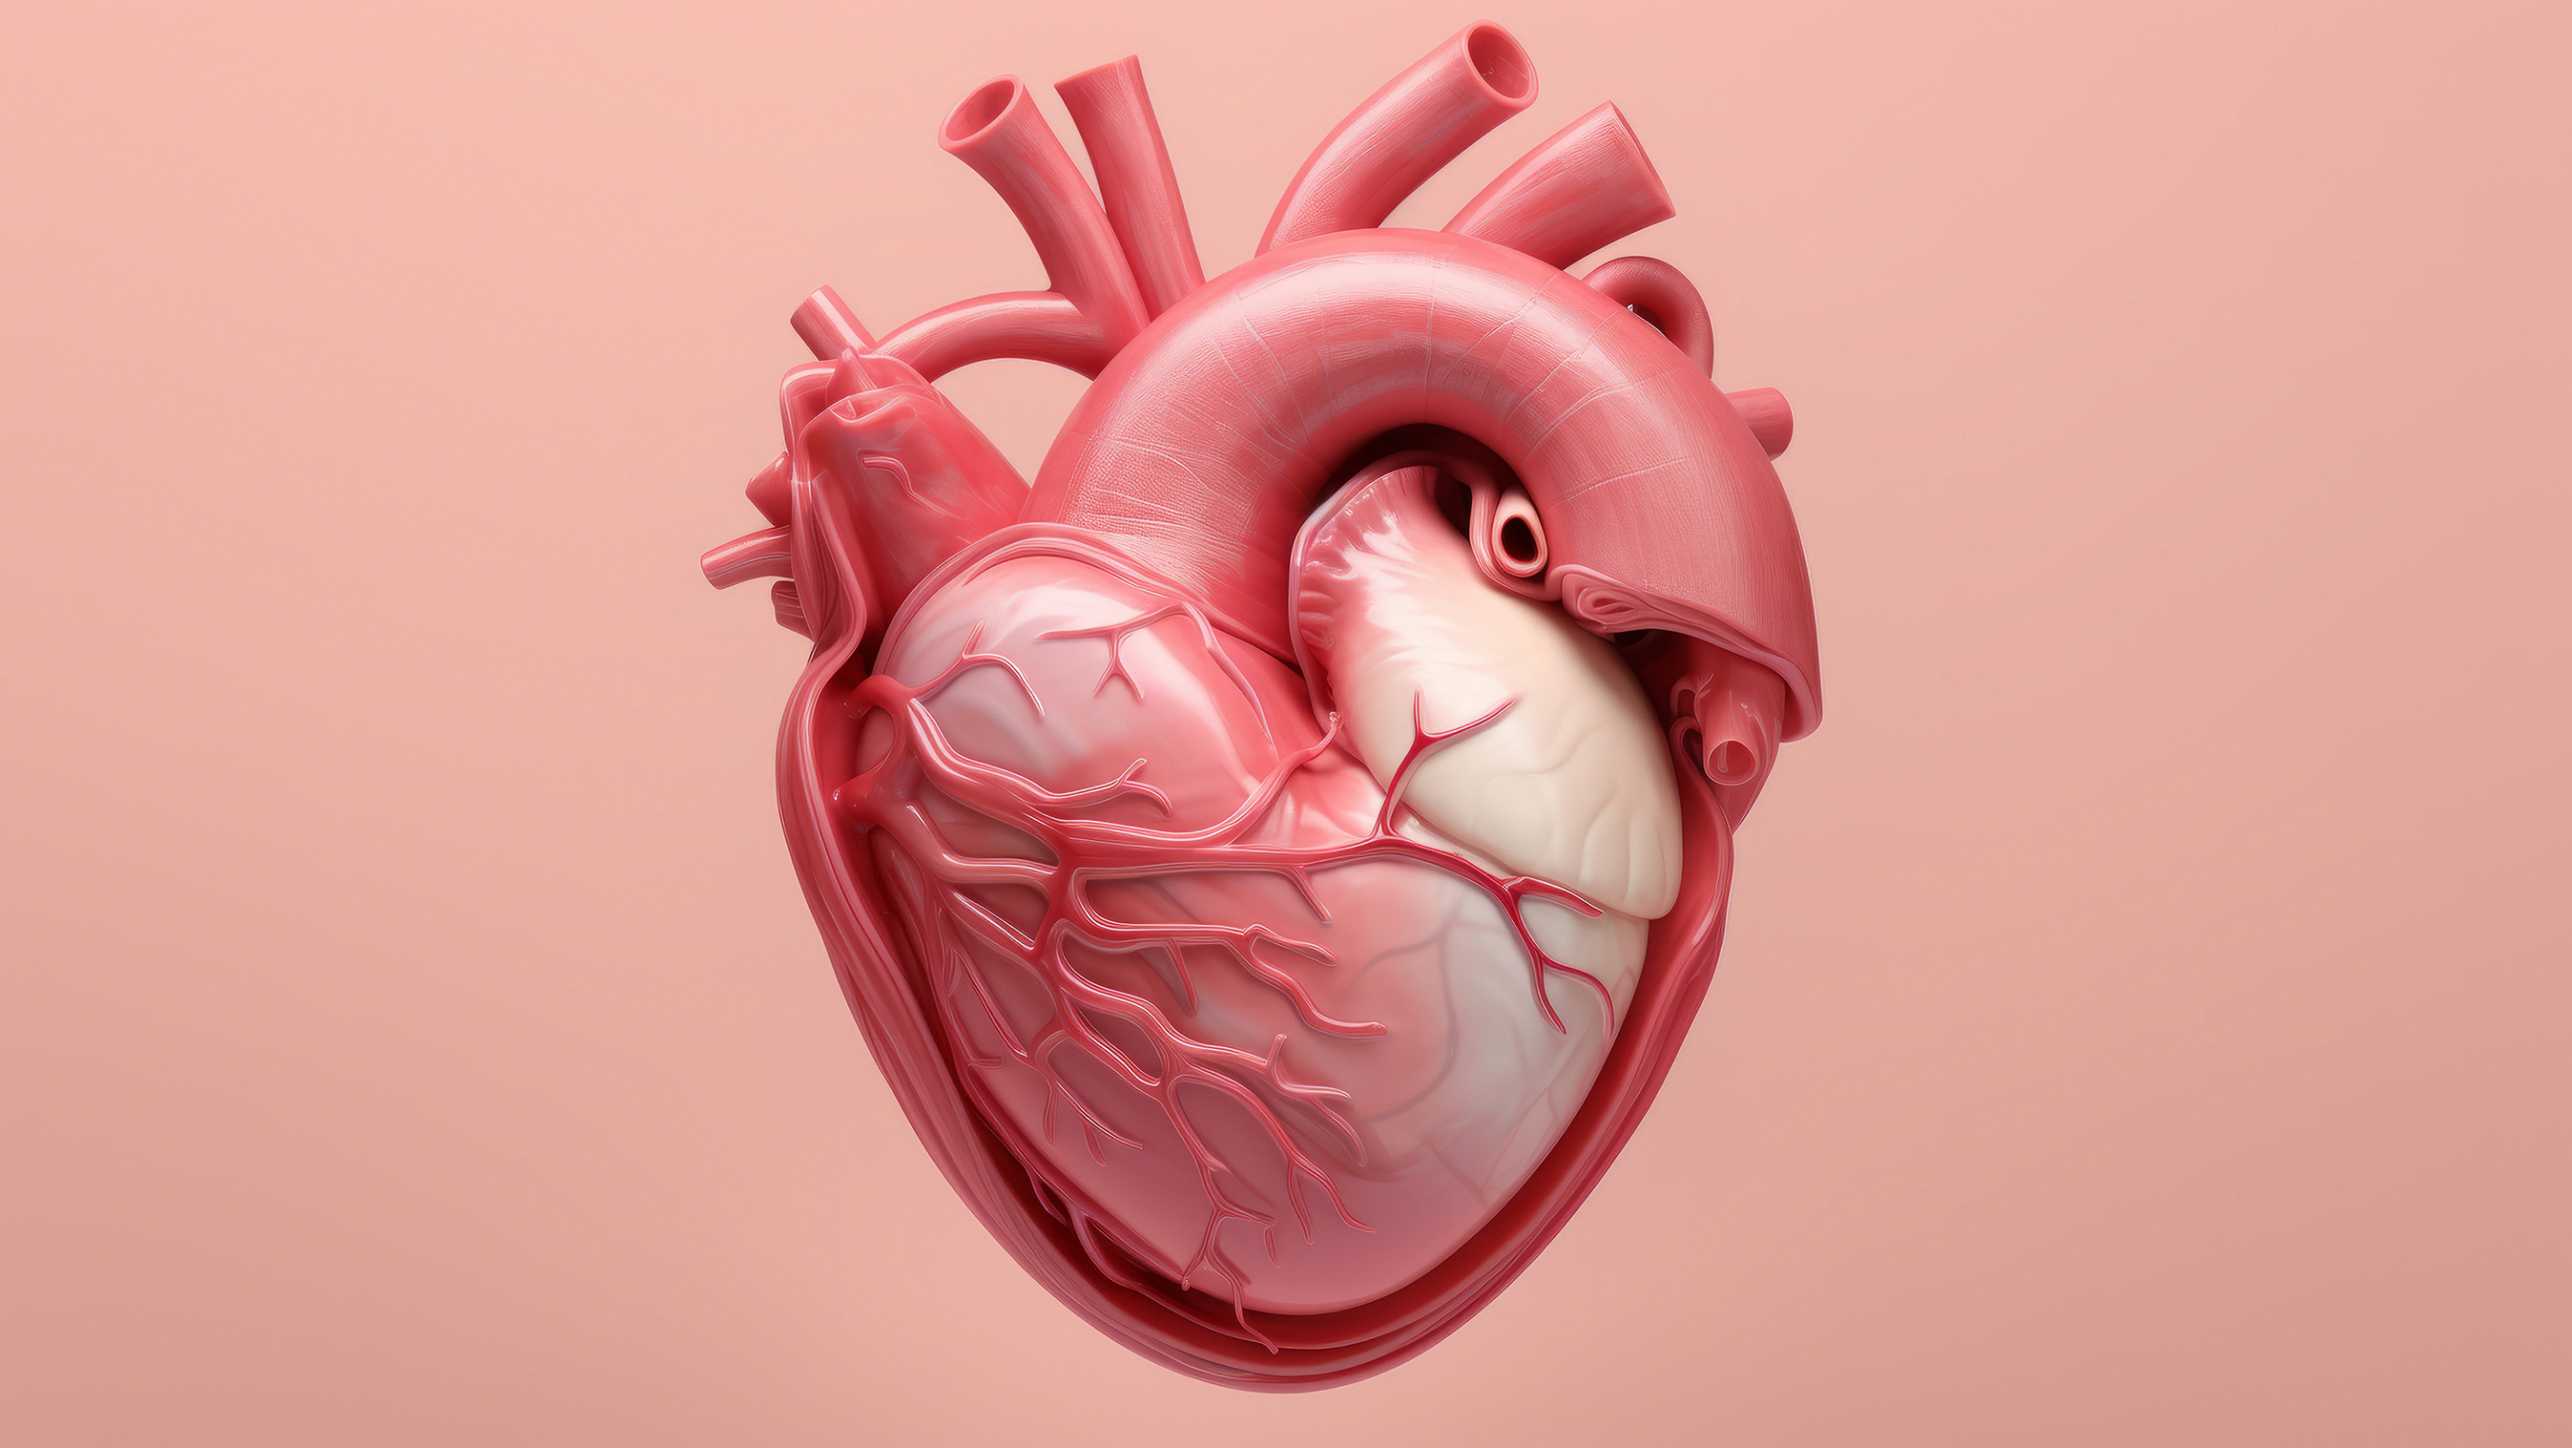 Representation of a heart